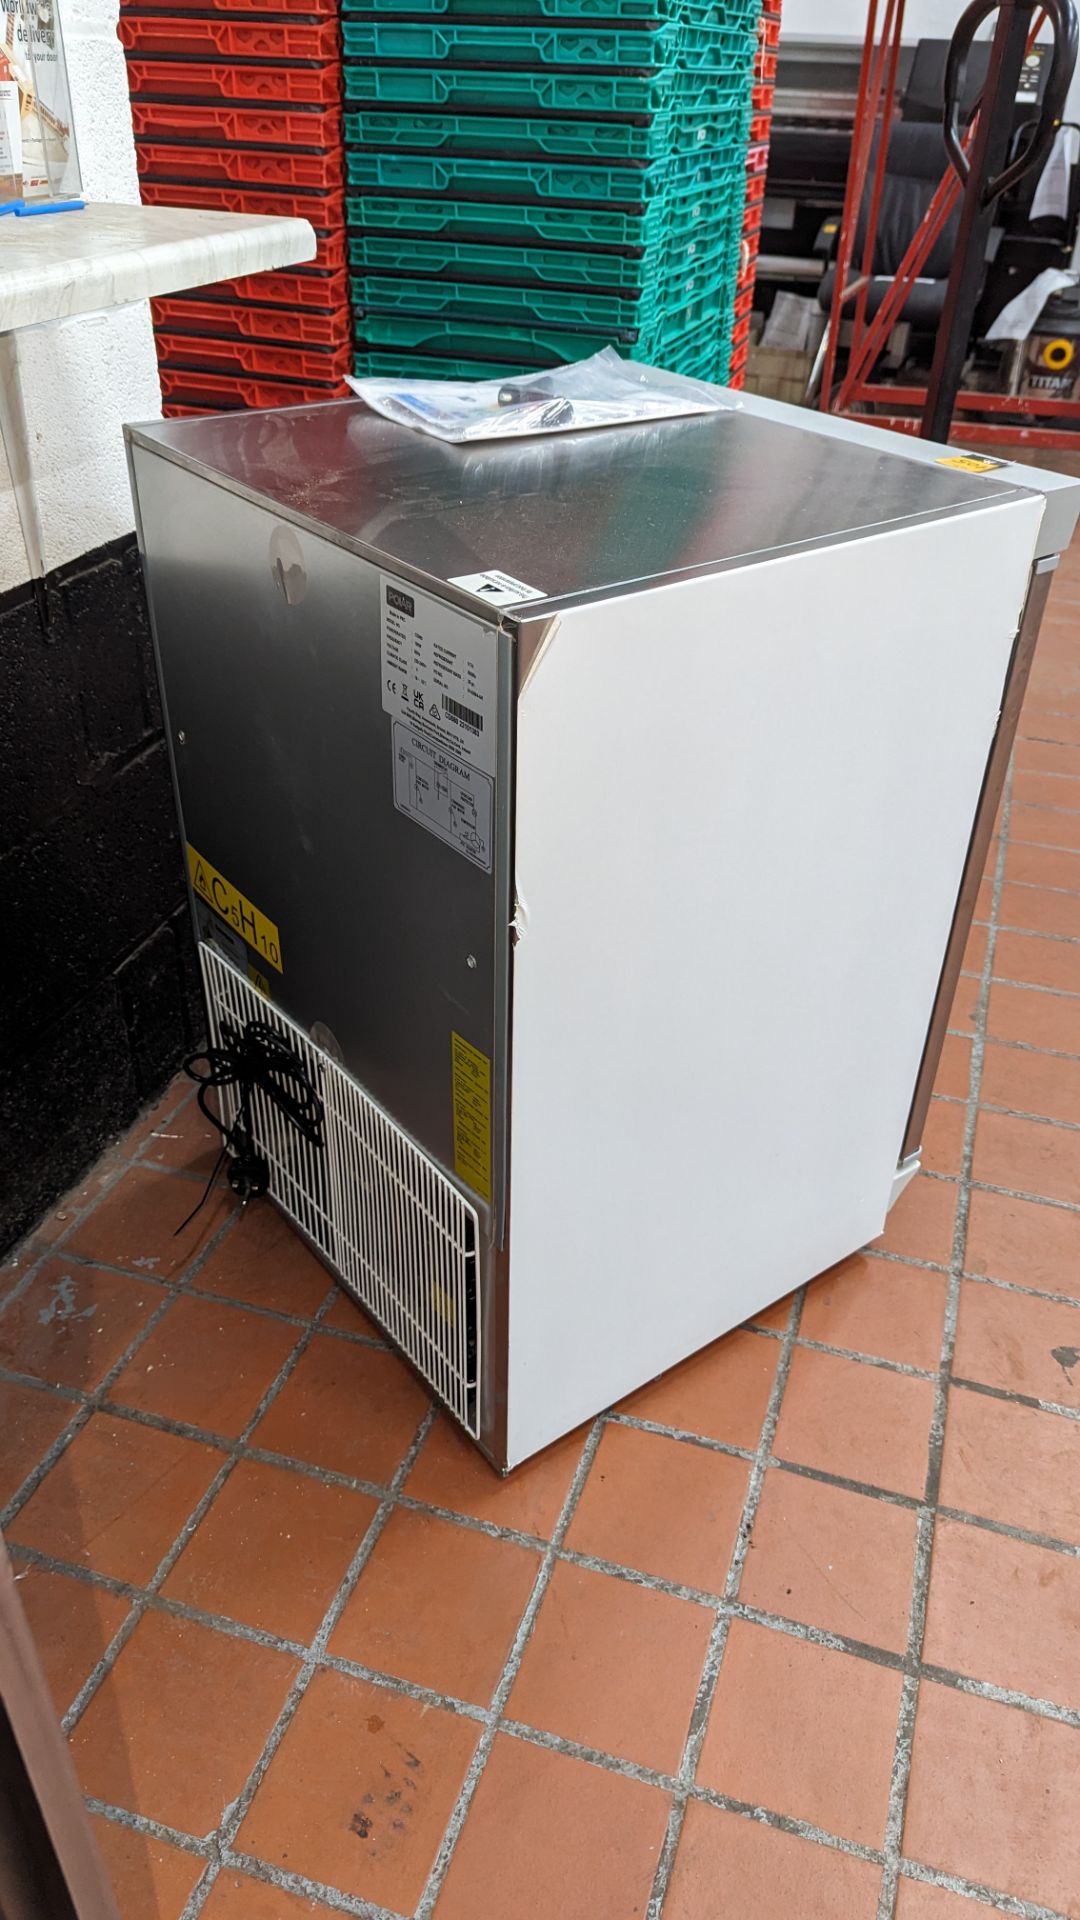 Polar CD080 150 litre stainless steel under counter fridge, including manual. Stil has original prot - Image 8 of 9